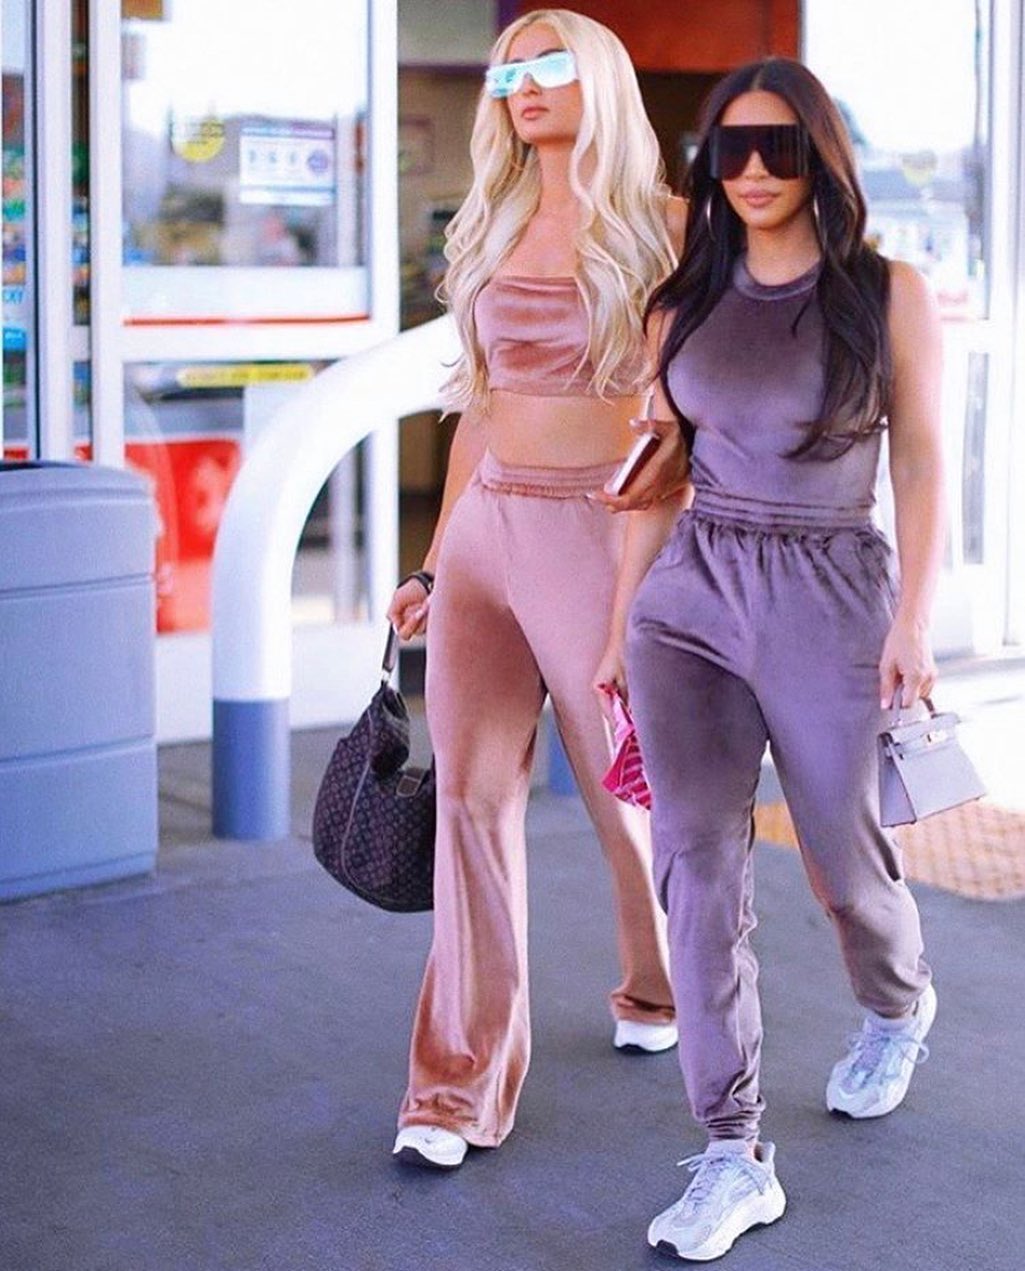 Fotos n°3 : Paris Hilton y Kim Kardashian Reliving the Glory Days!